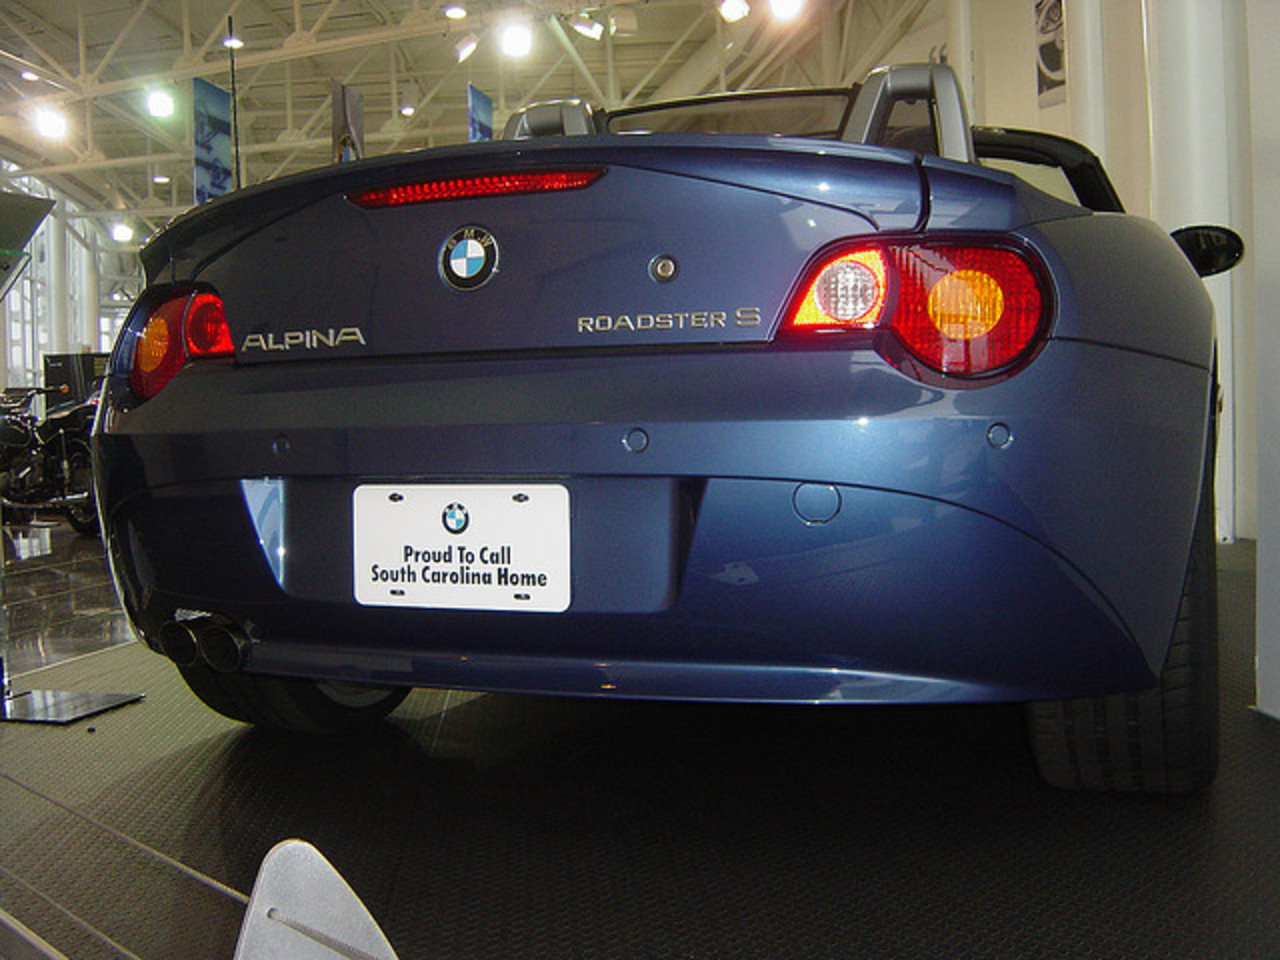 BMW Alpina Roadster S 2 | Flickr - Photo Sharing!